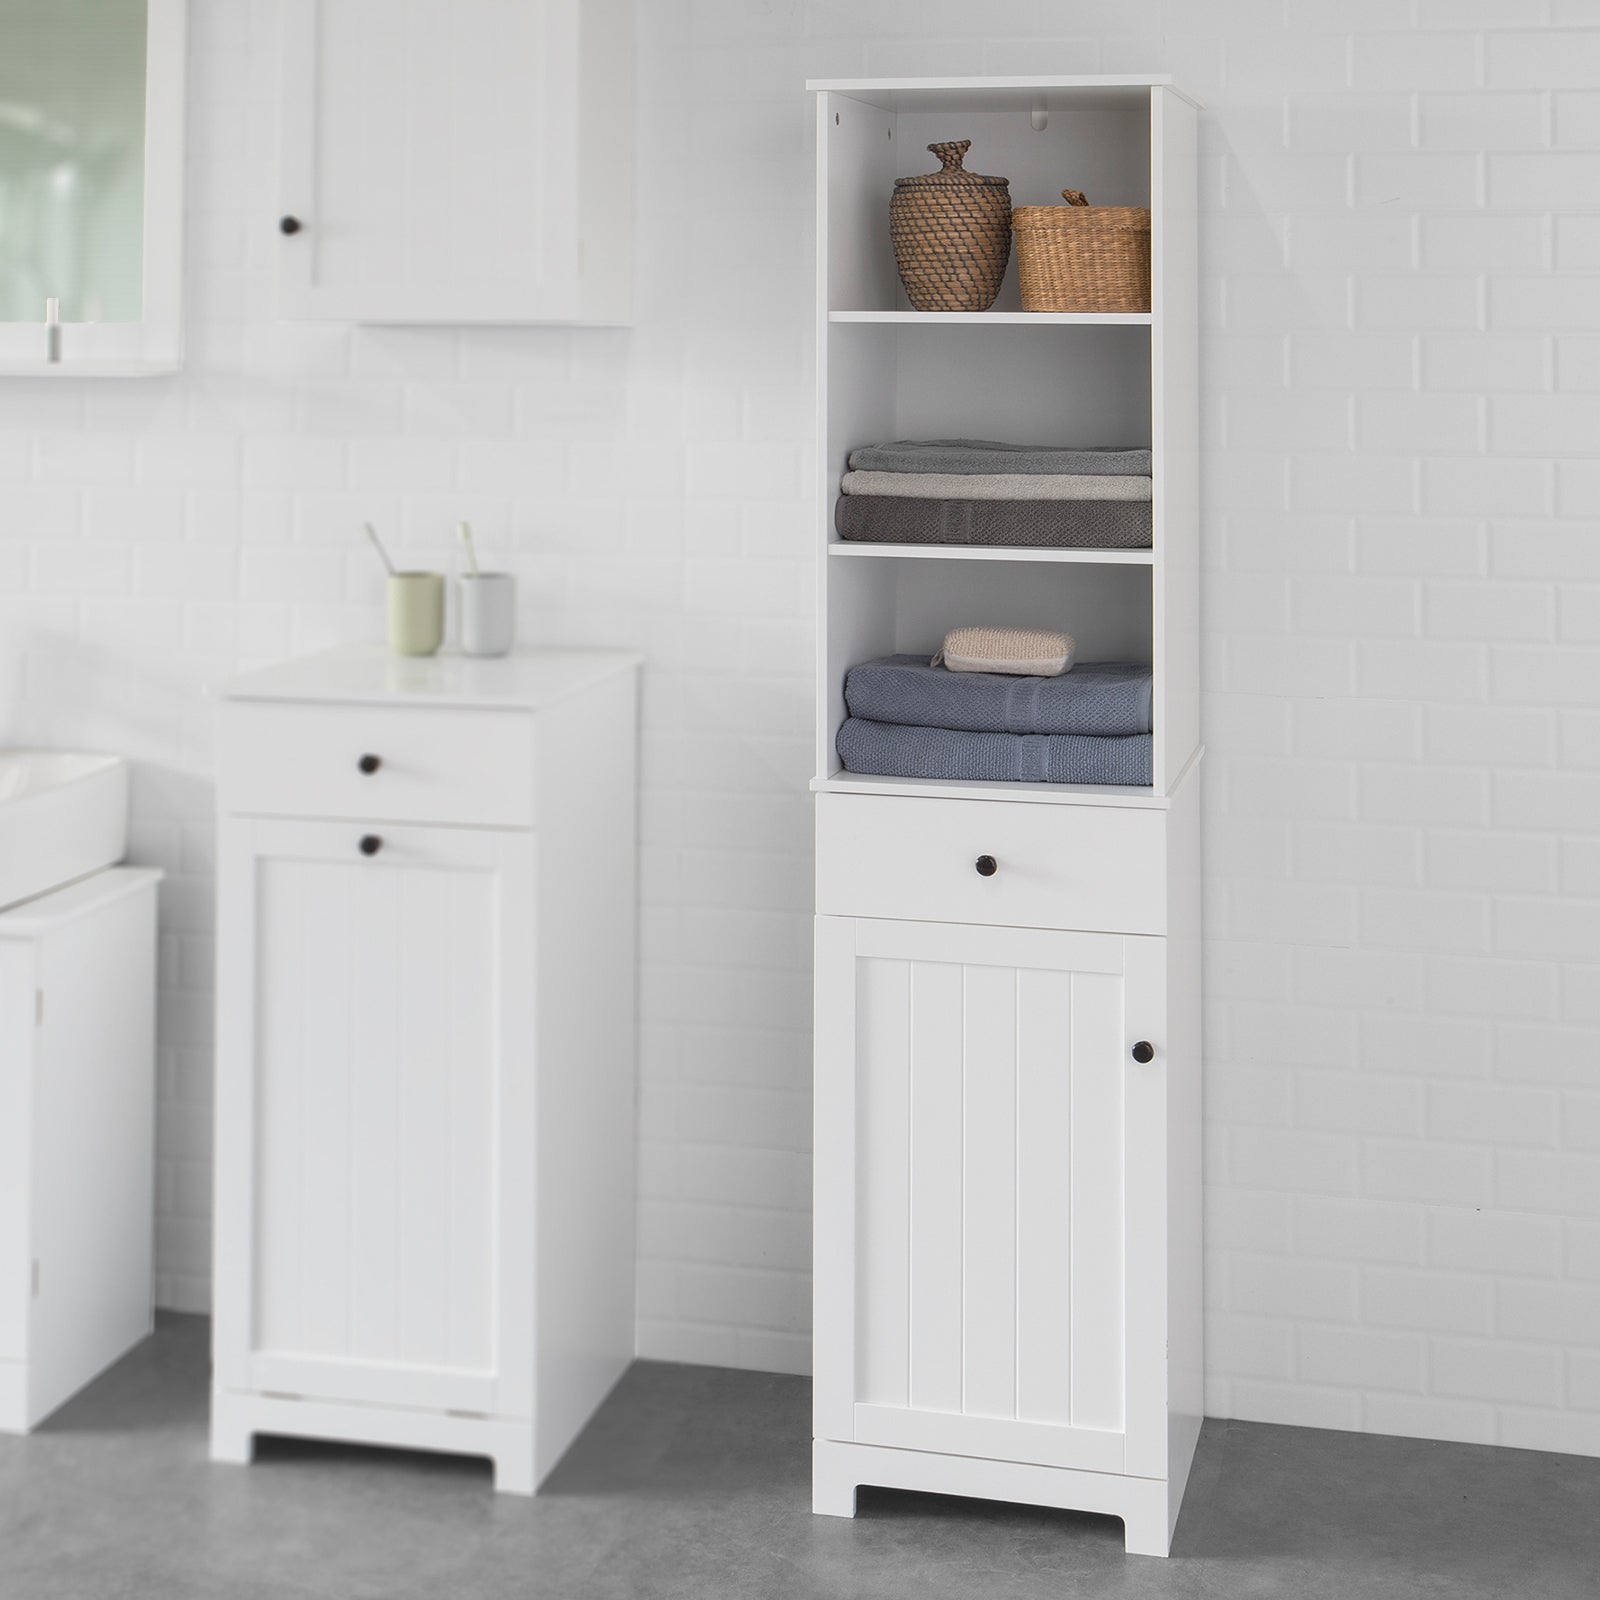 SoBuy BZR17-W, White Tall Bathroom Storage Cabinet Unit with 3 Shelves 1 Drawer 1 Cabinet, 40x35x161cm